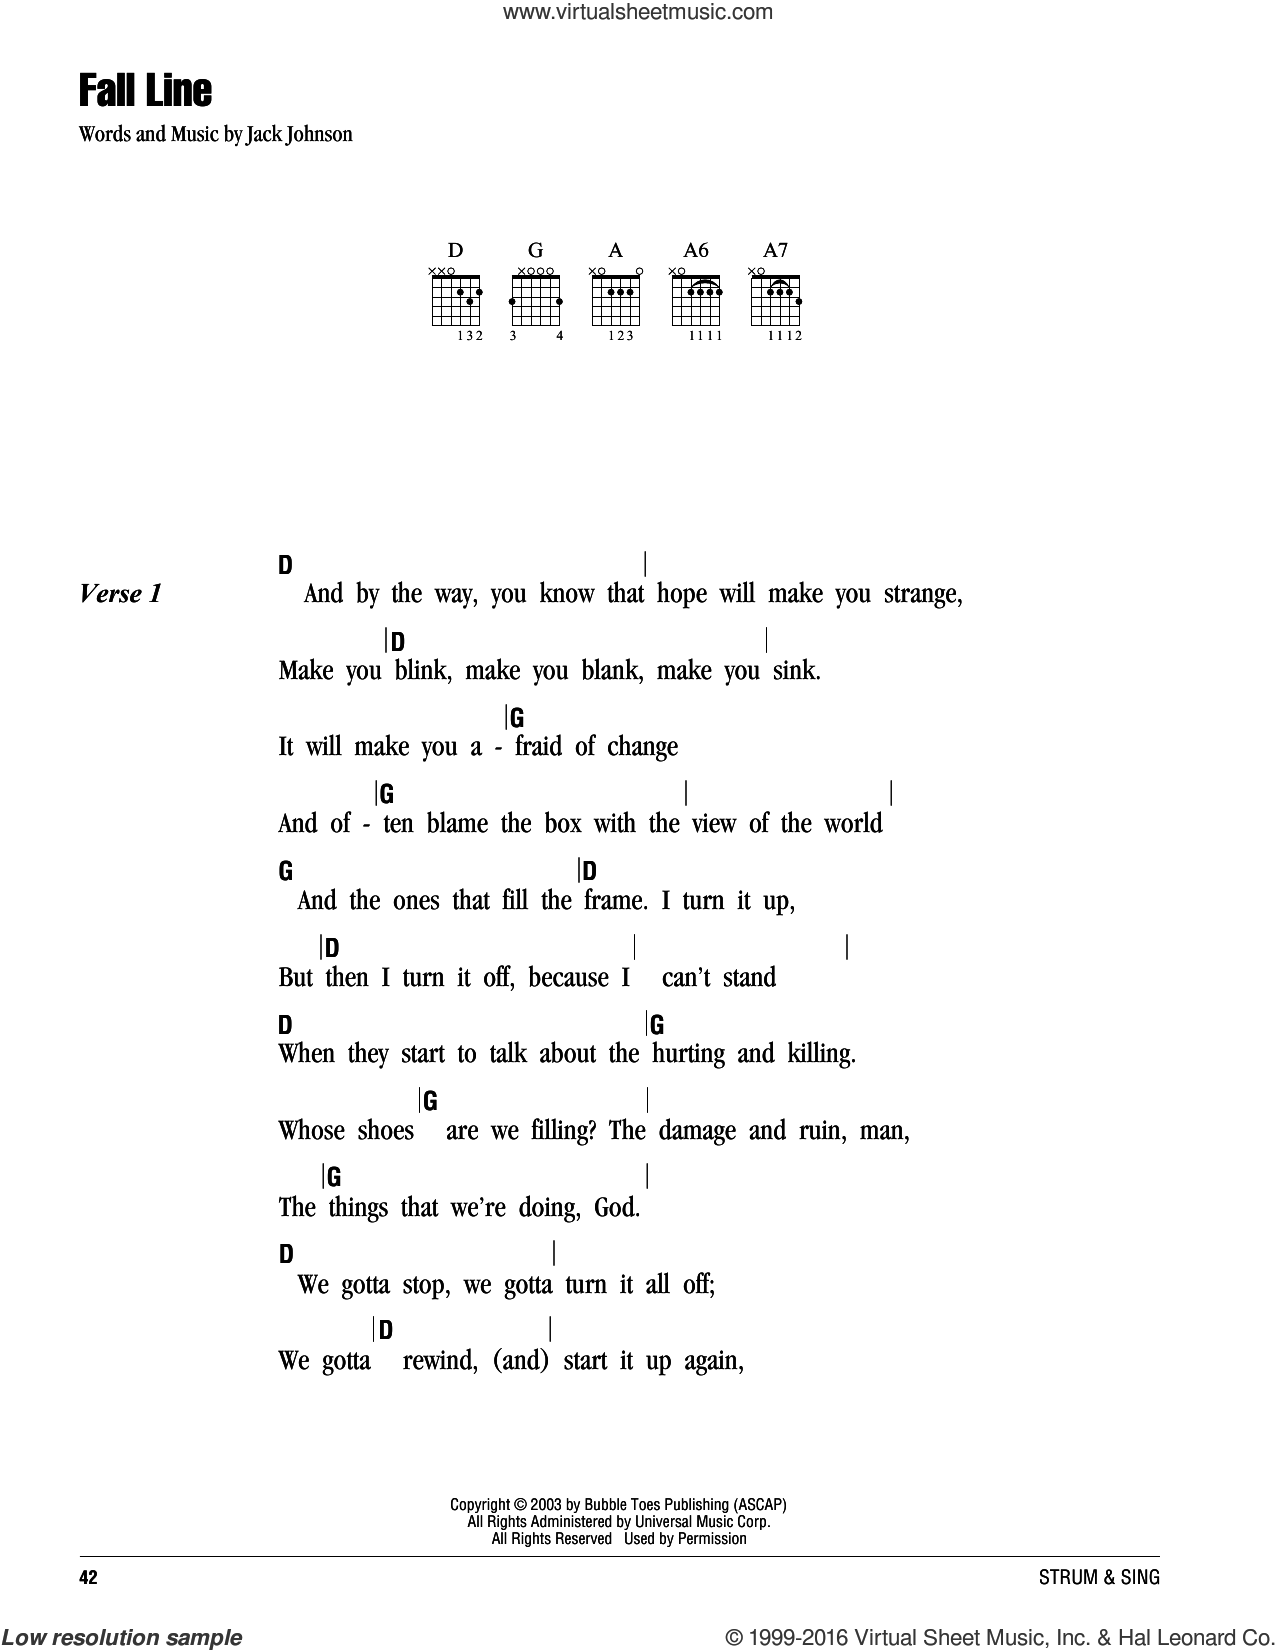 Fall Line sheet music for guitar (chords) (PDF) v2